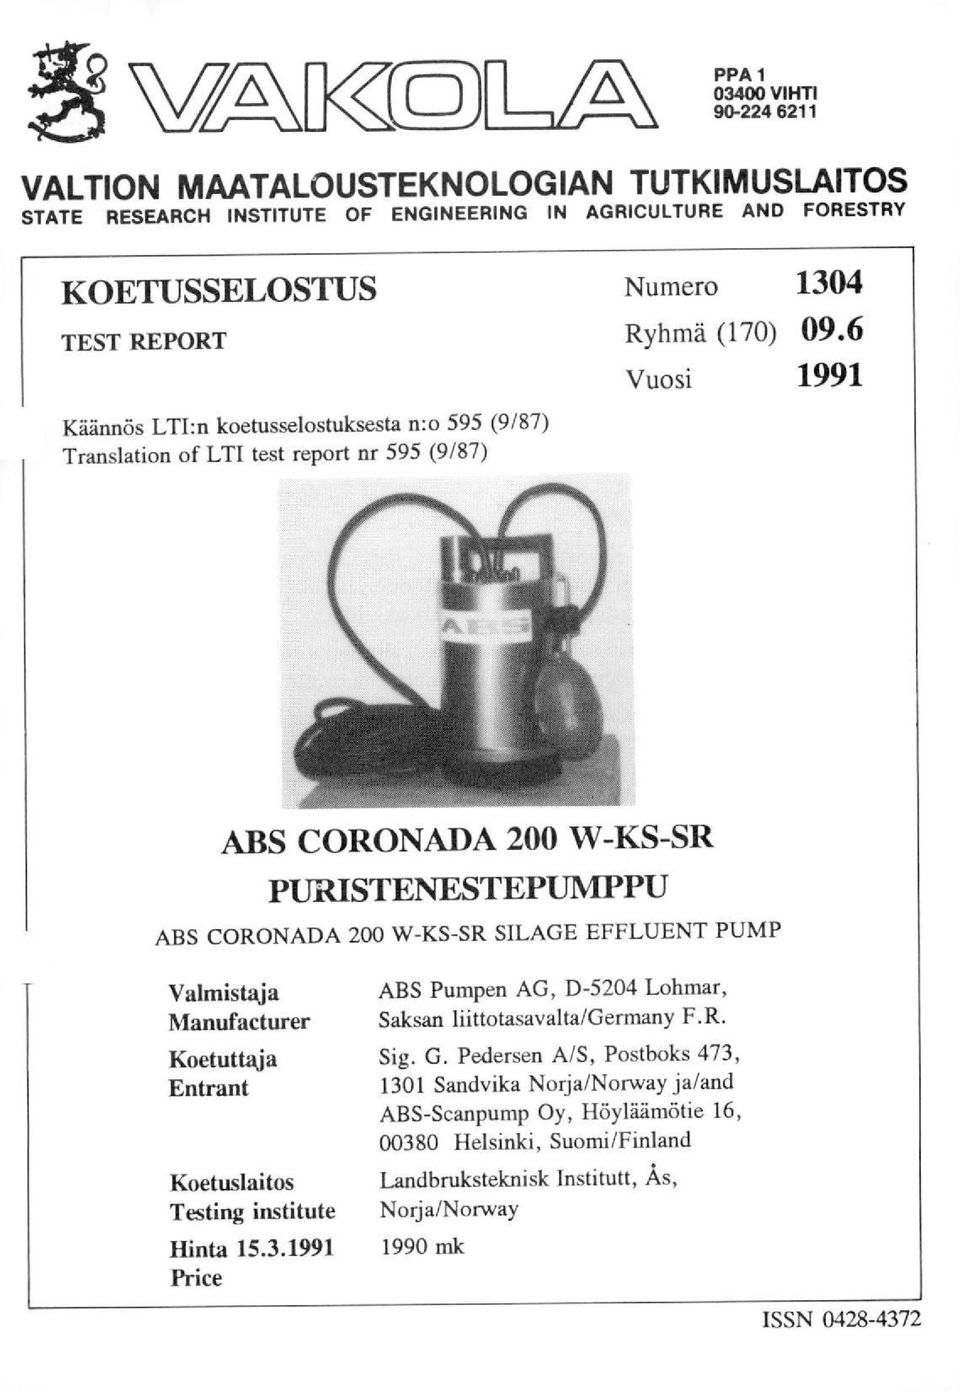 6 Vuosi 1991 ABS CORONADA 200 W-KS-SR PURISTENESTEPUNIPPU ABS CORONADA 200 W-KS-SR SILAGE EFFLUENT PUMP Valmistaja Manufacturer ABS Pumpen AG, D-5204 Lohmar, Saksan liittotasavalta/germany